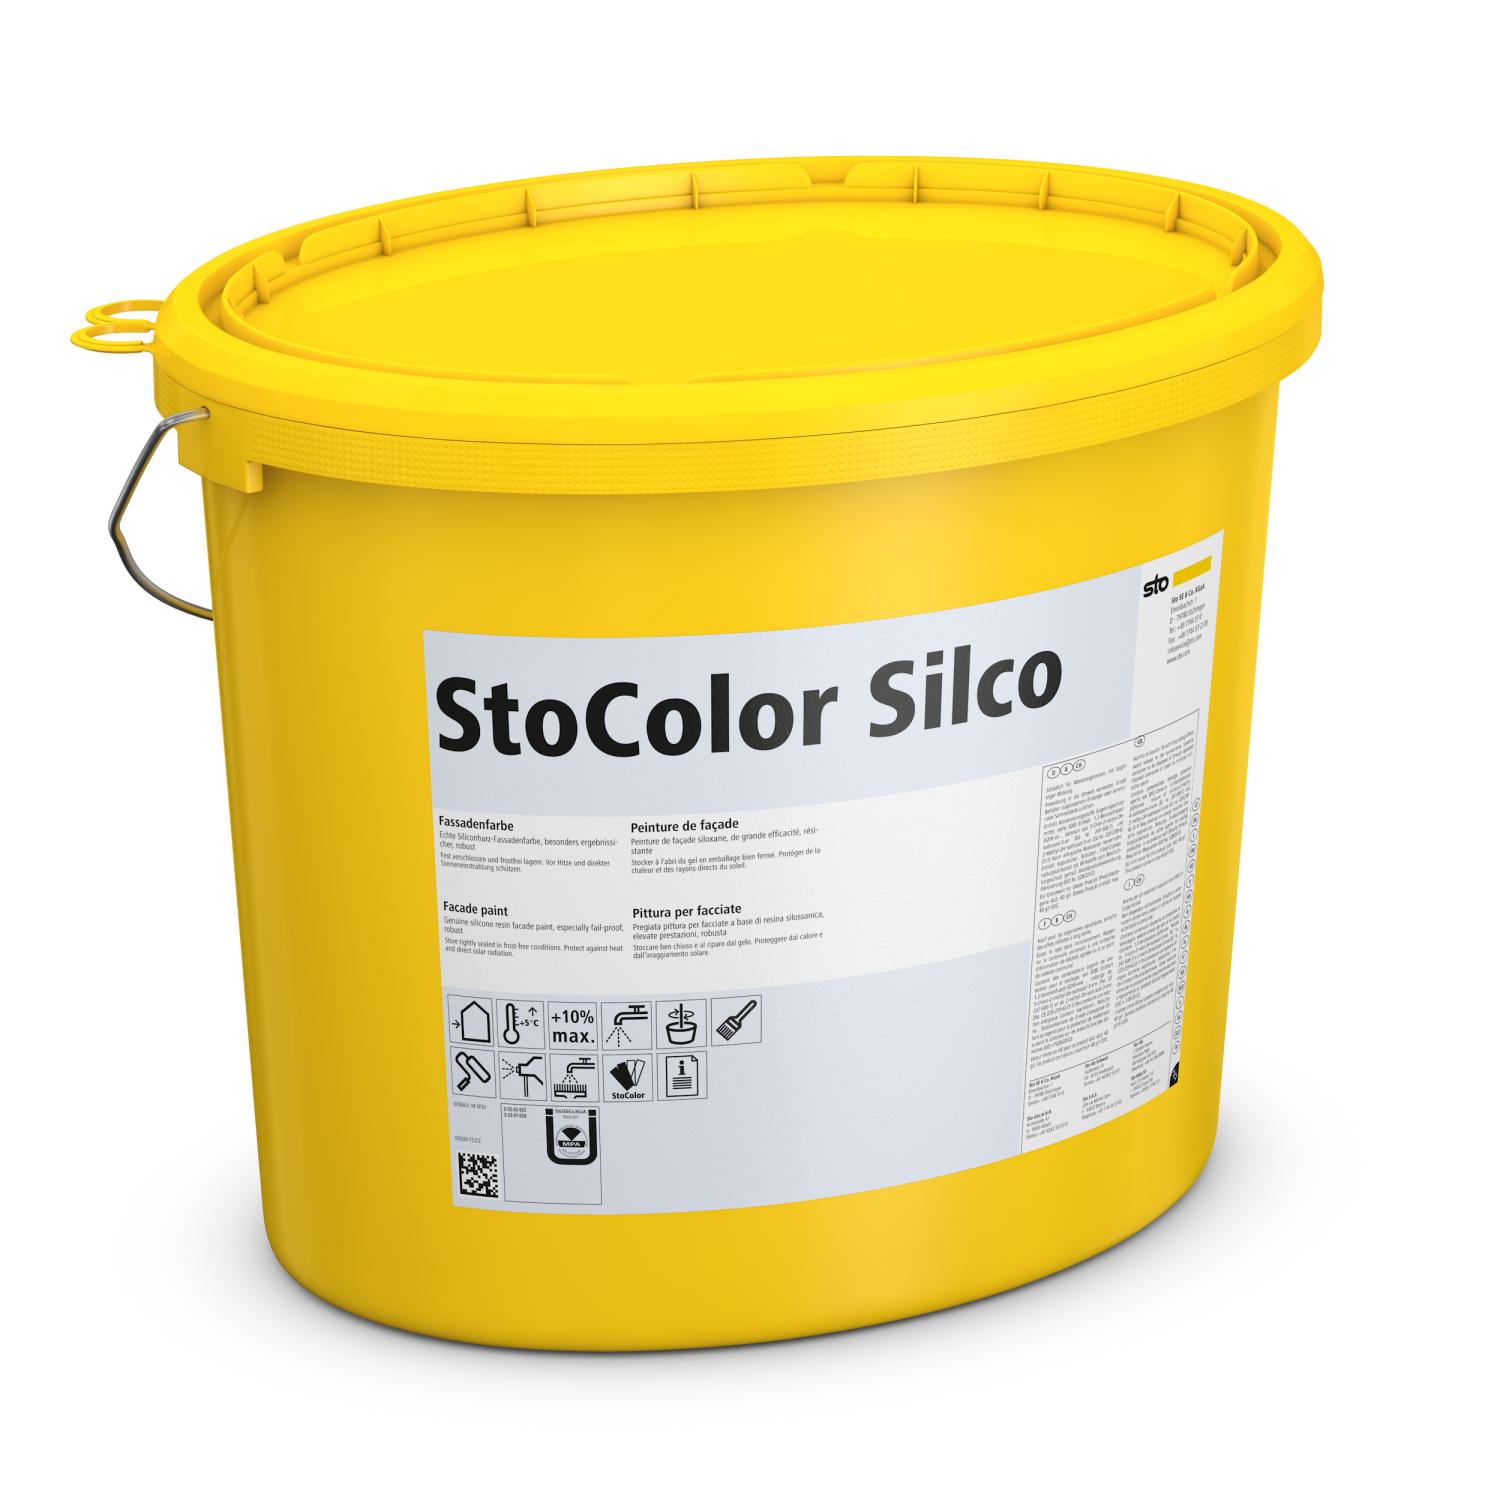 StoColor Silco - getönt, 5 l Eimer